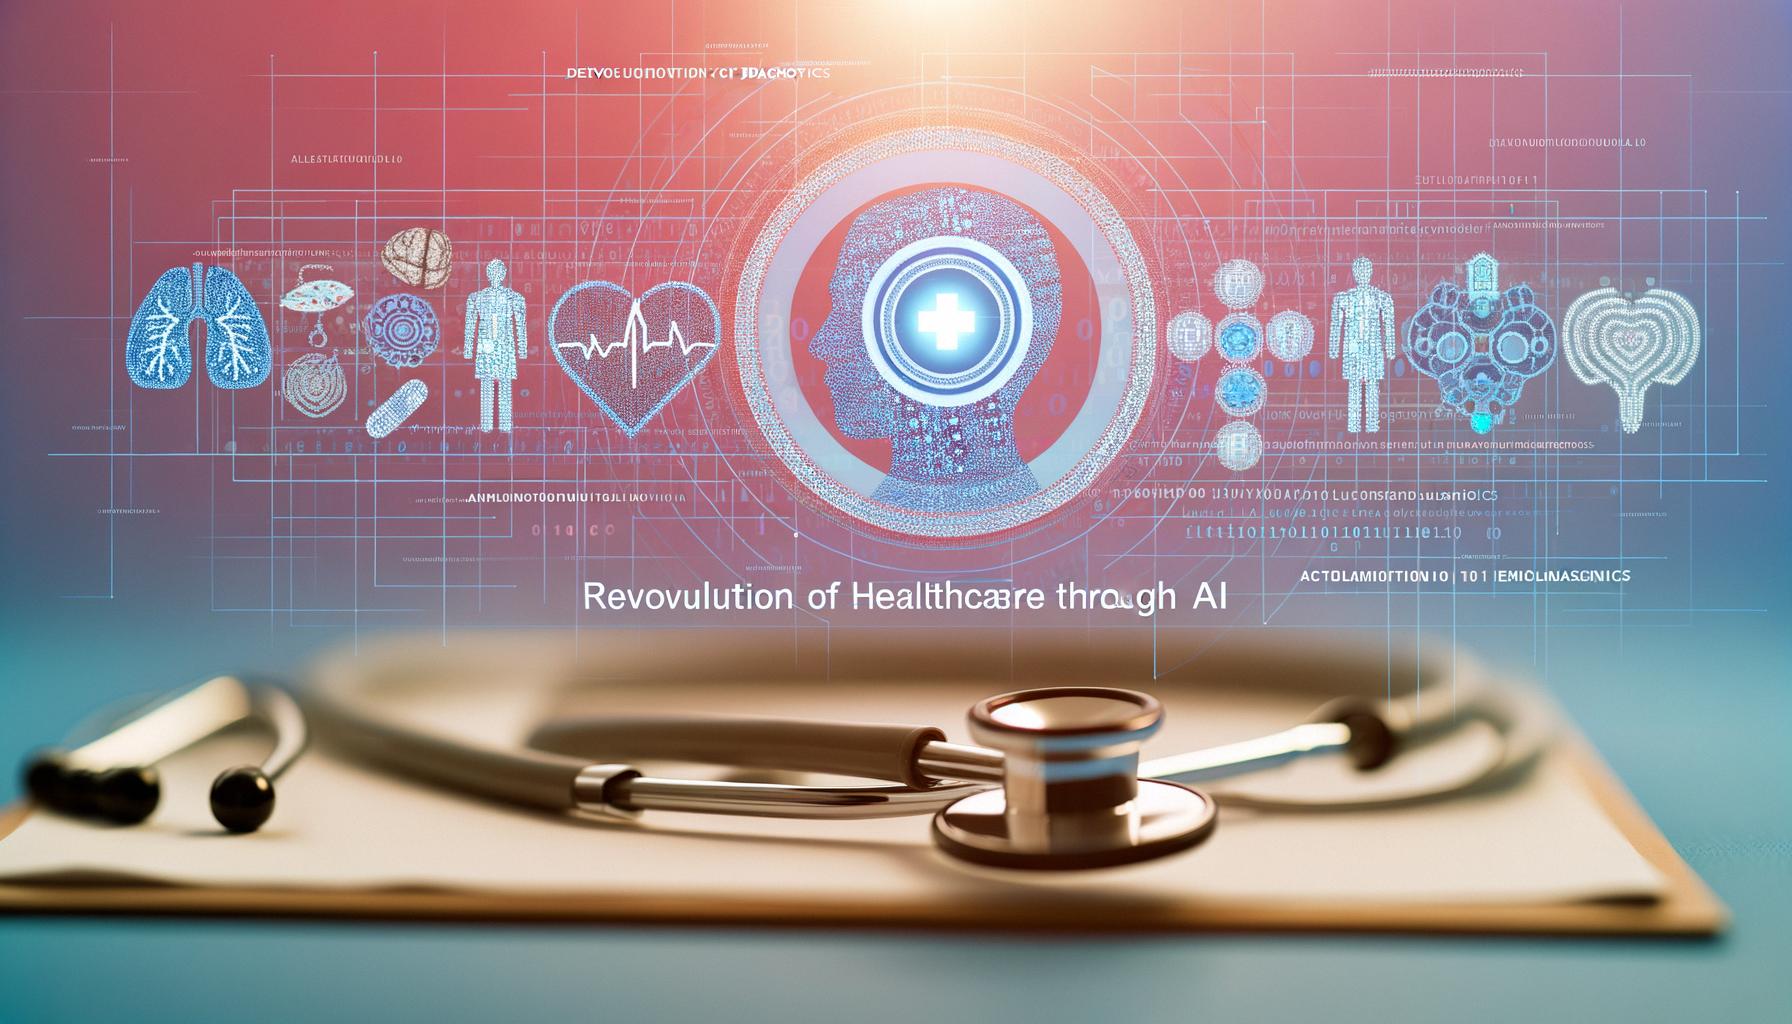 AI is revolutionizing healthcare and enhancing diagnostics